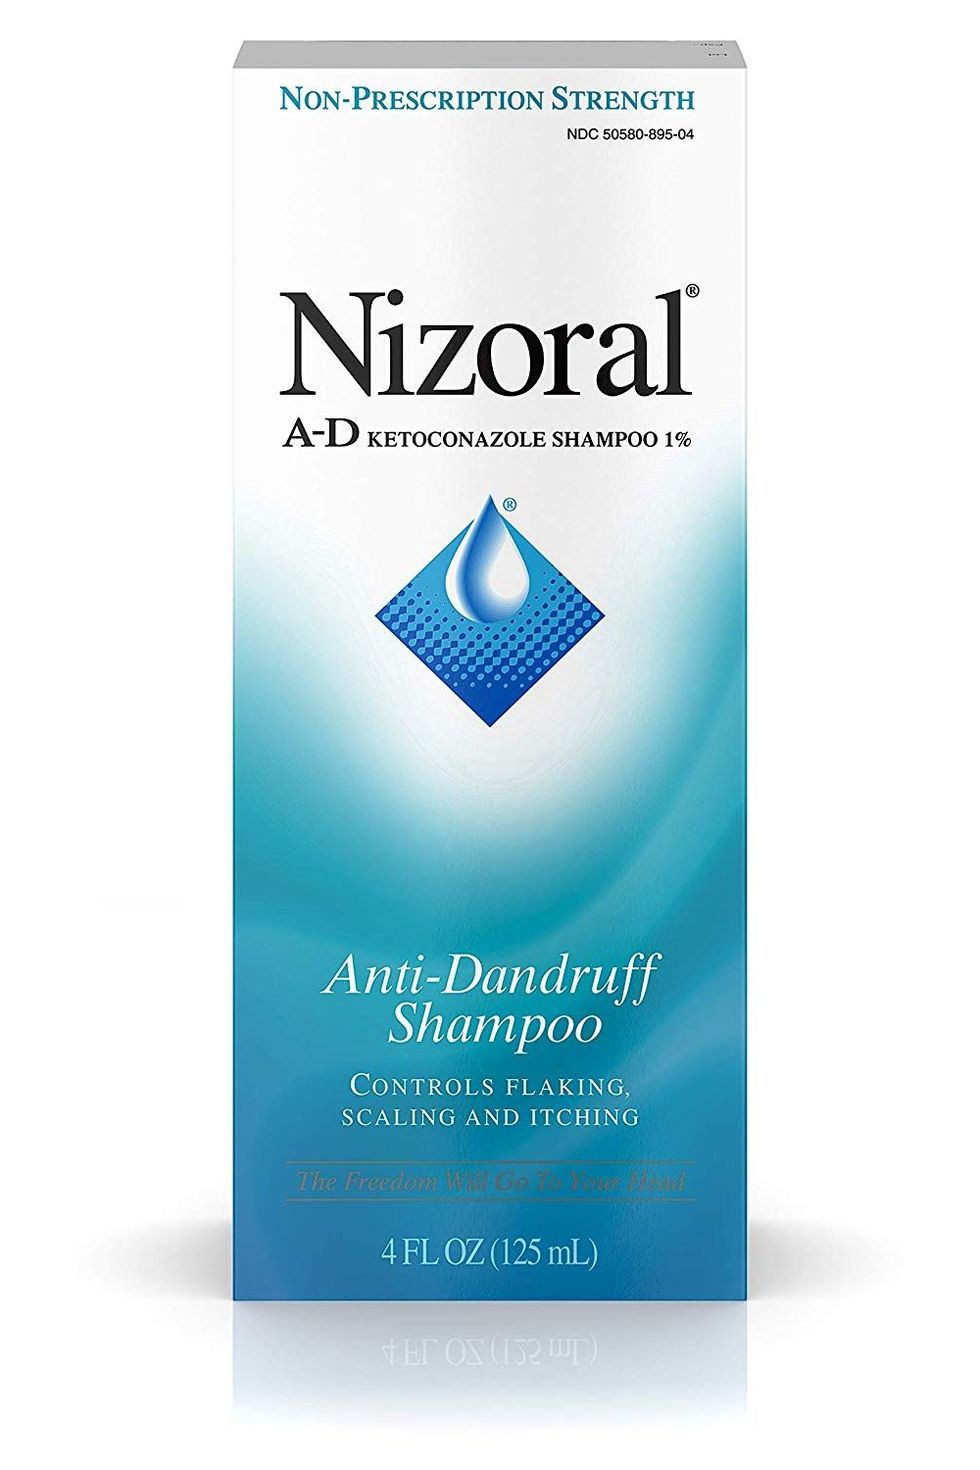  A-D Anti-Dandruff Shampoo